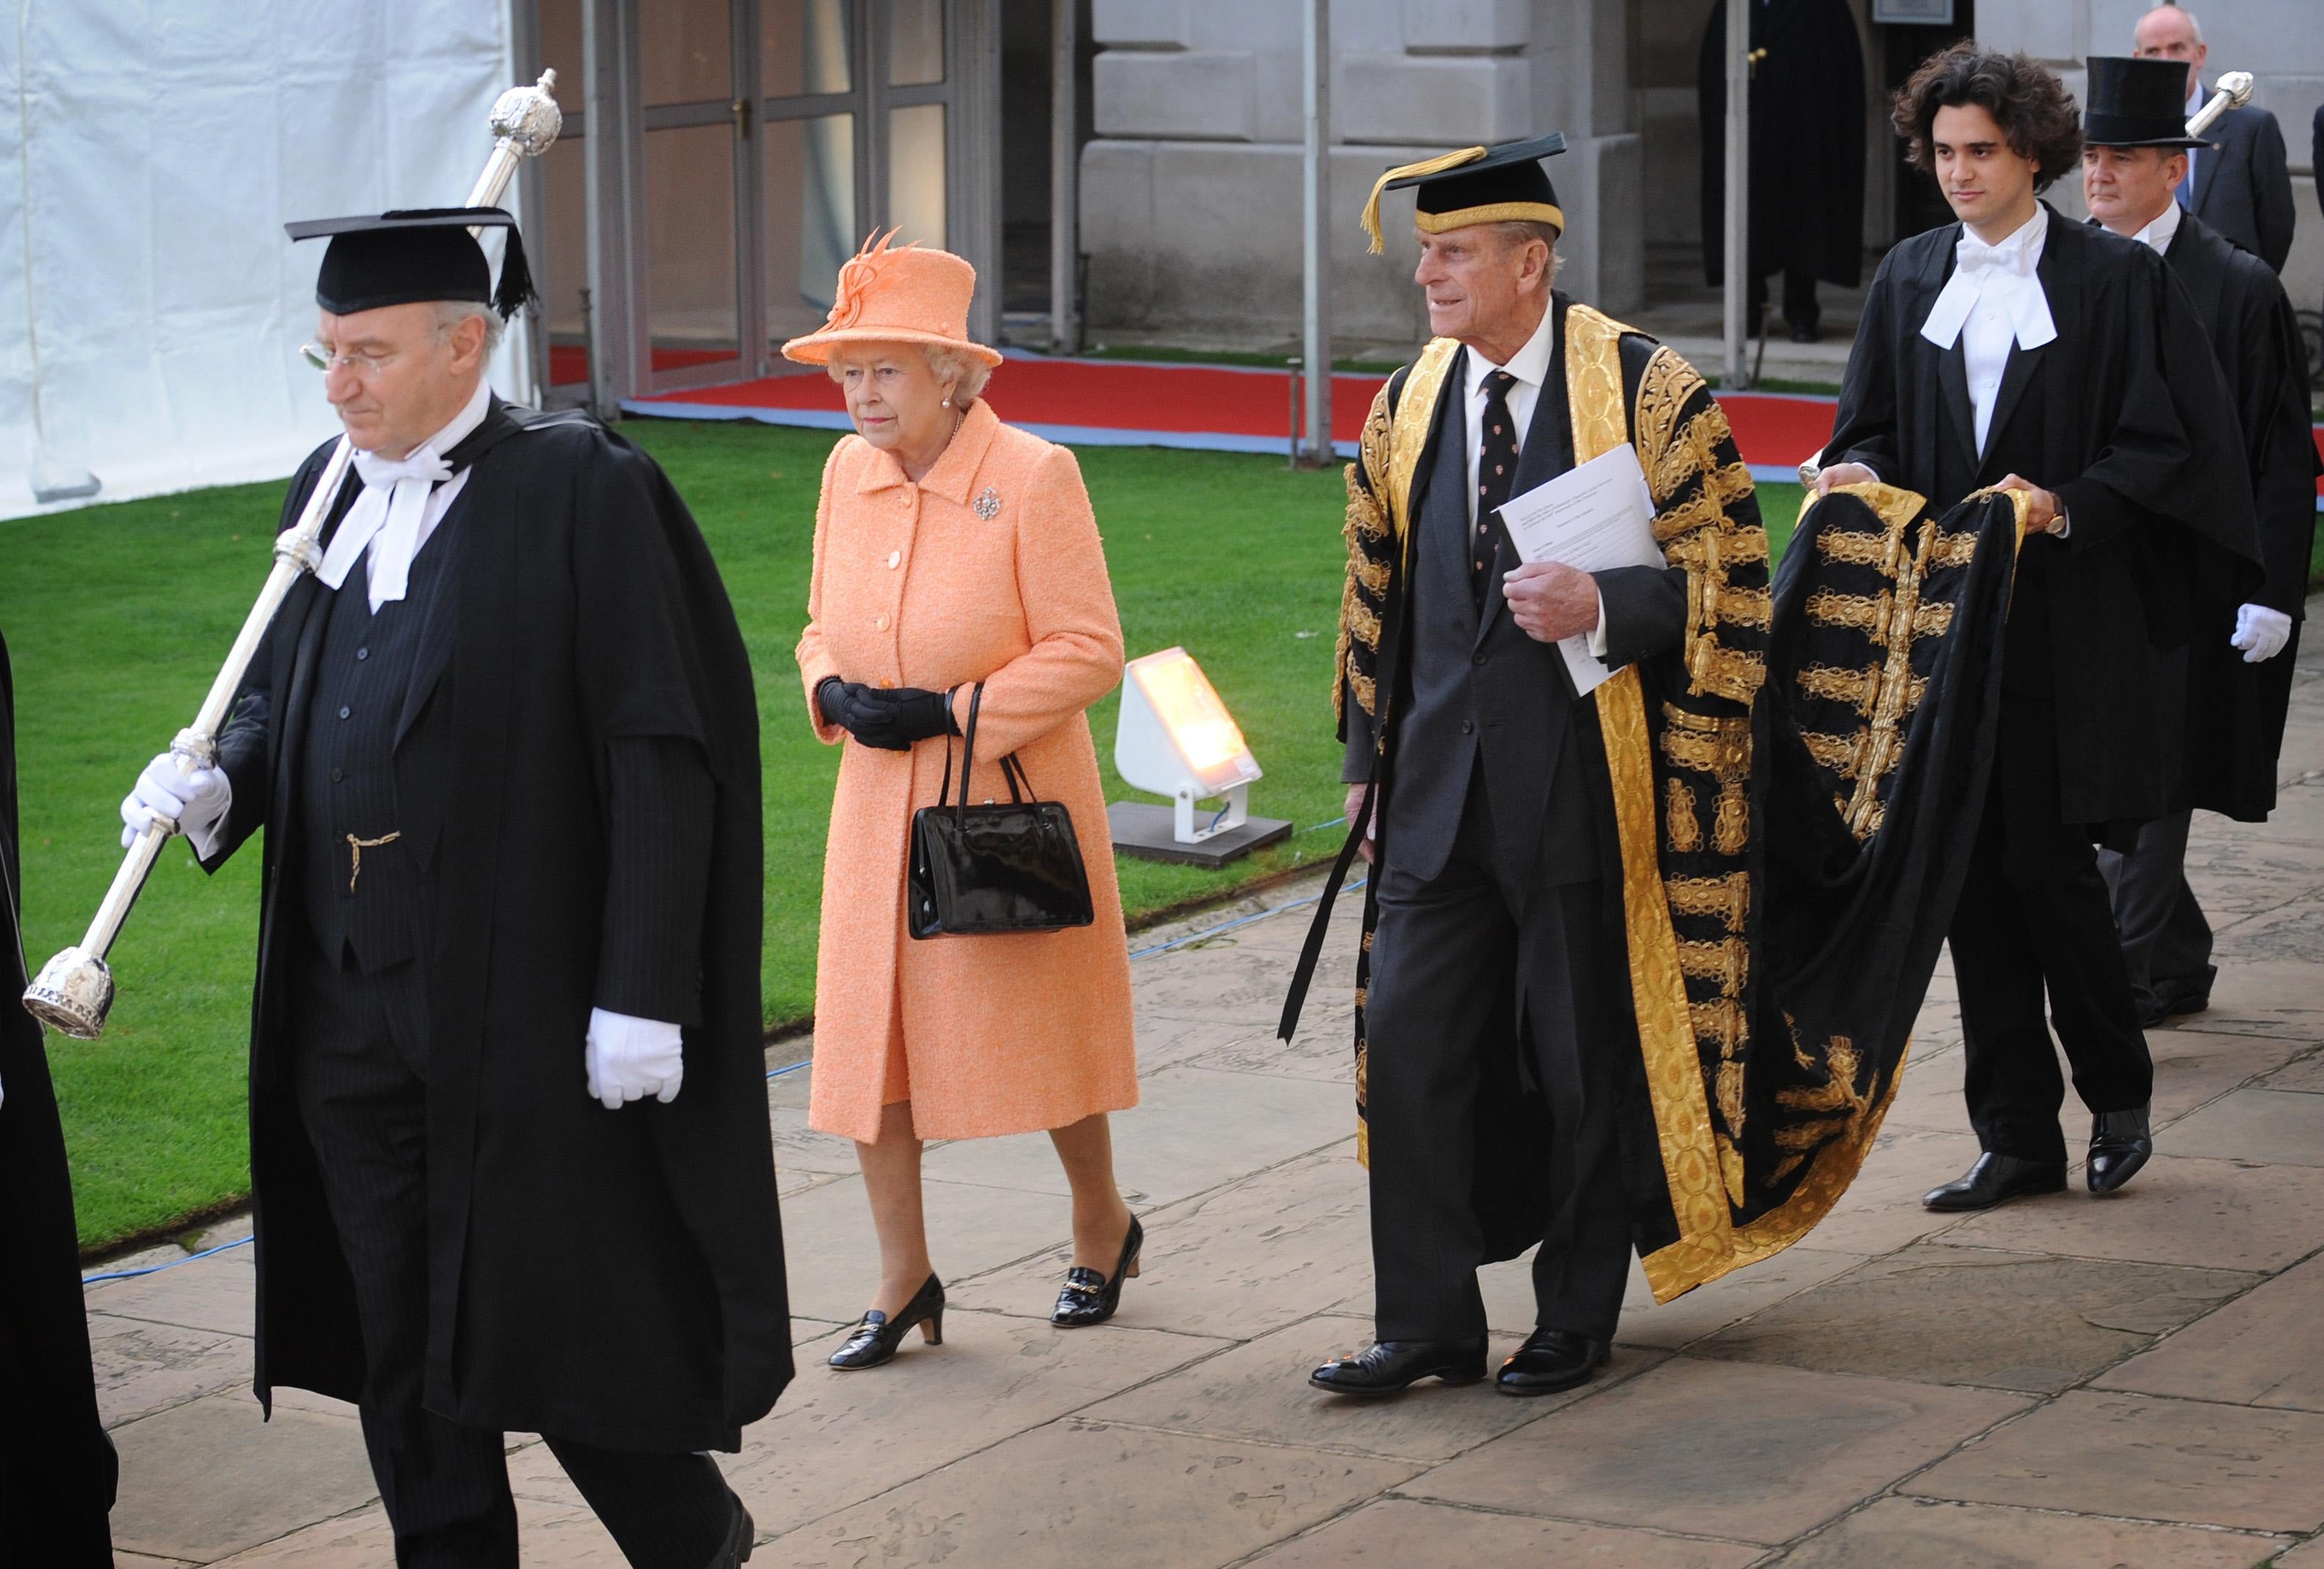 Queen Elizabeth II and Prince Philip, Duke of Edinburgh attend a service at King’s College, Cambridge